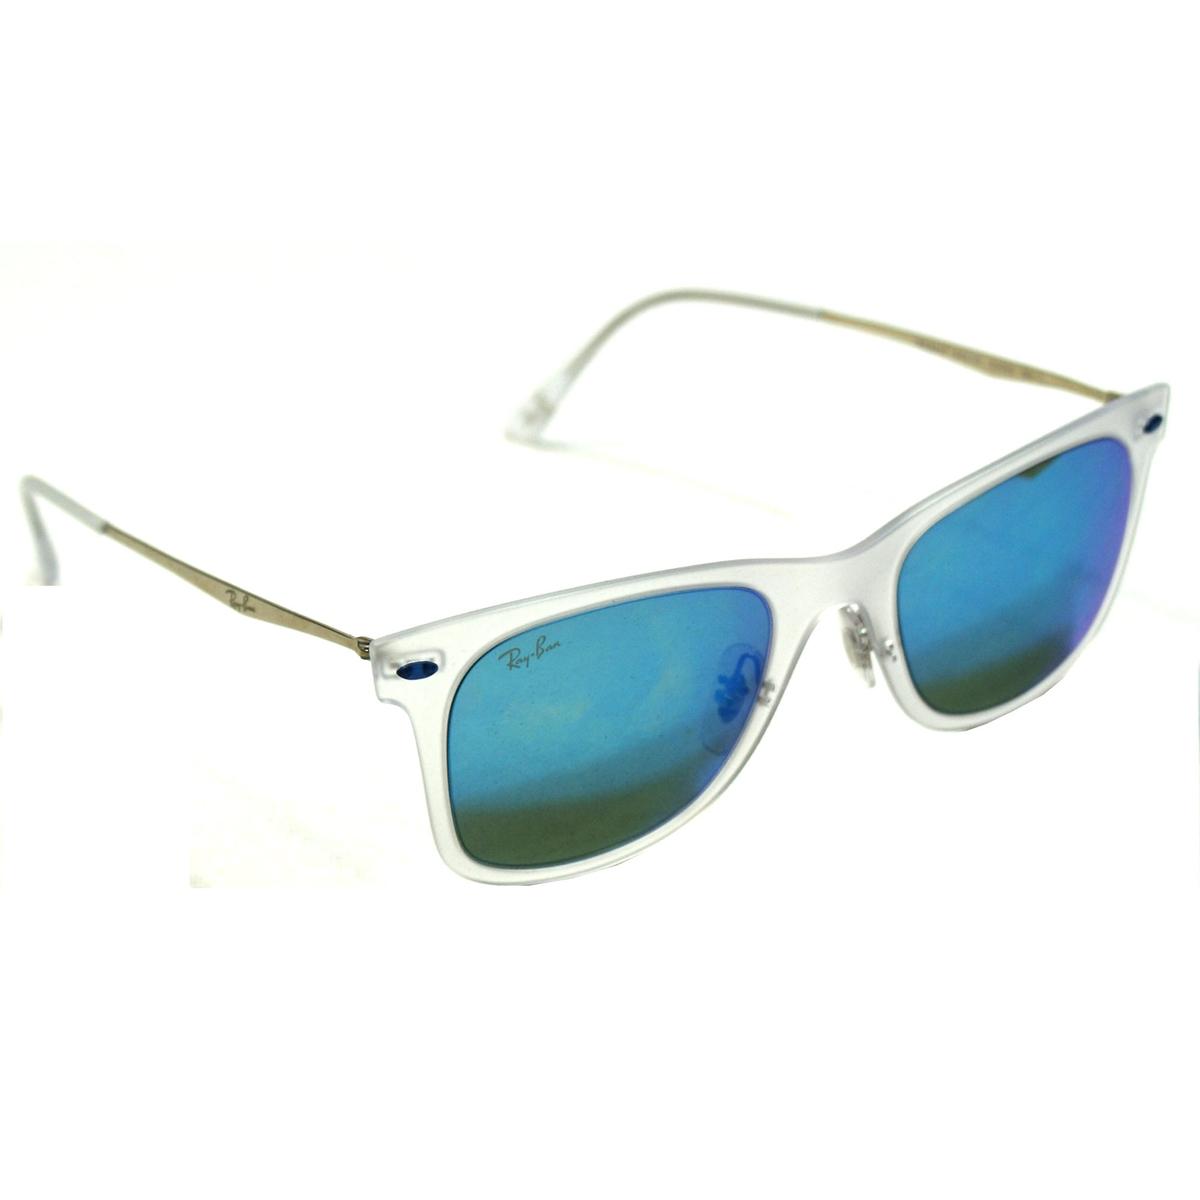 Ray Ban Ray Ban LightRay Blue Sunglasses #RB 4210 646/55 50 22 3N | Ray